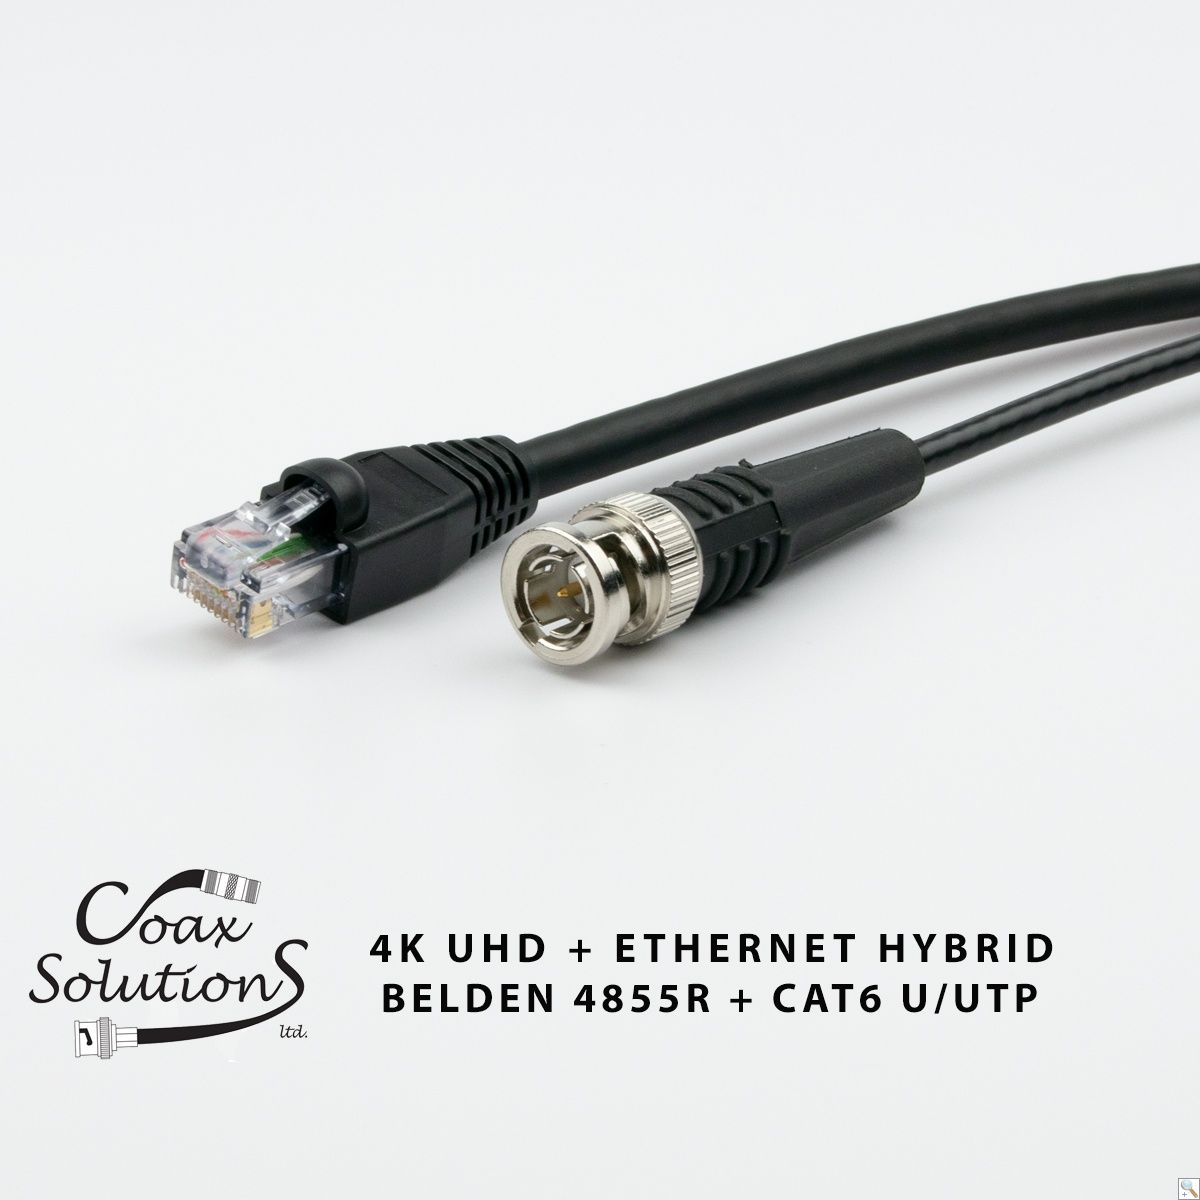 Belden 4855R + CAT6 Hybrid 4K UHD Patch Cable